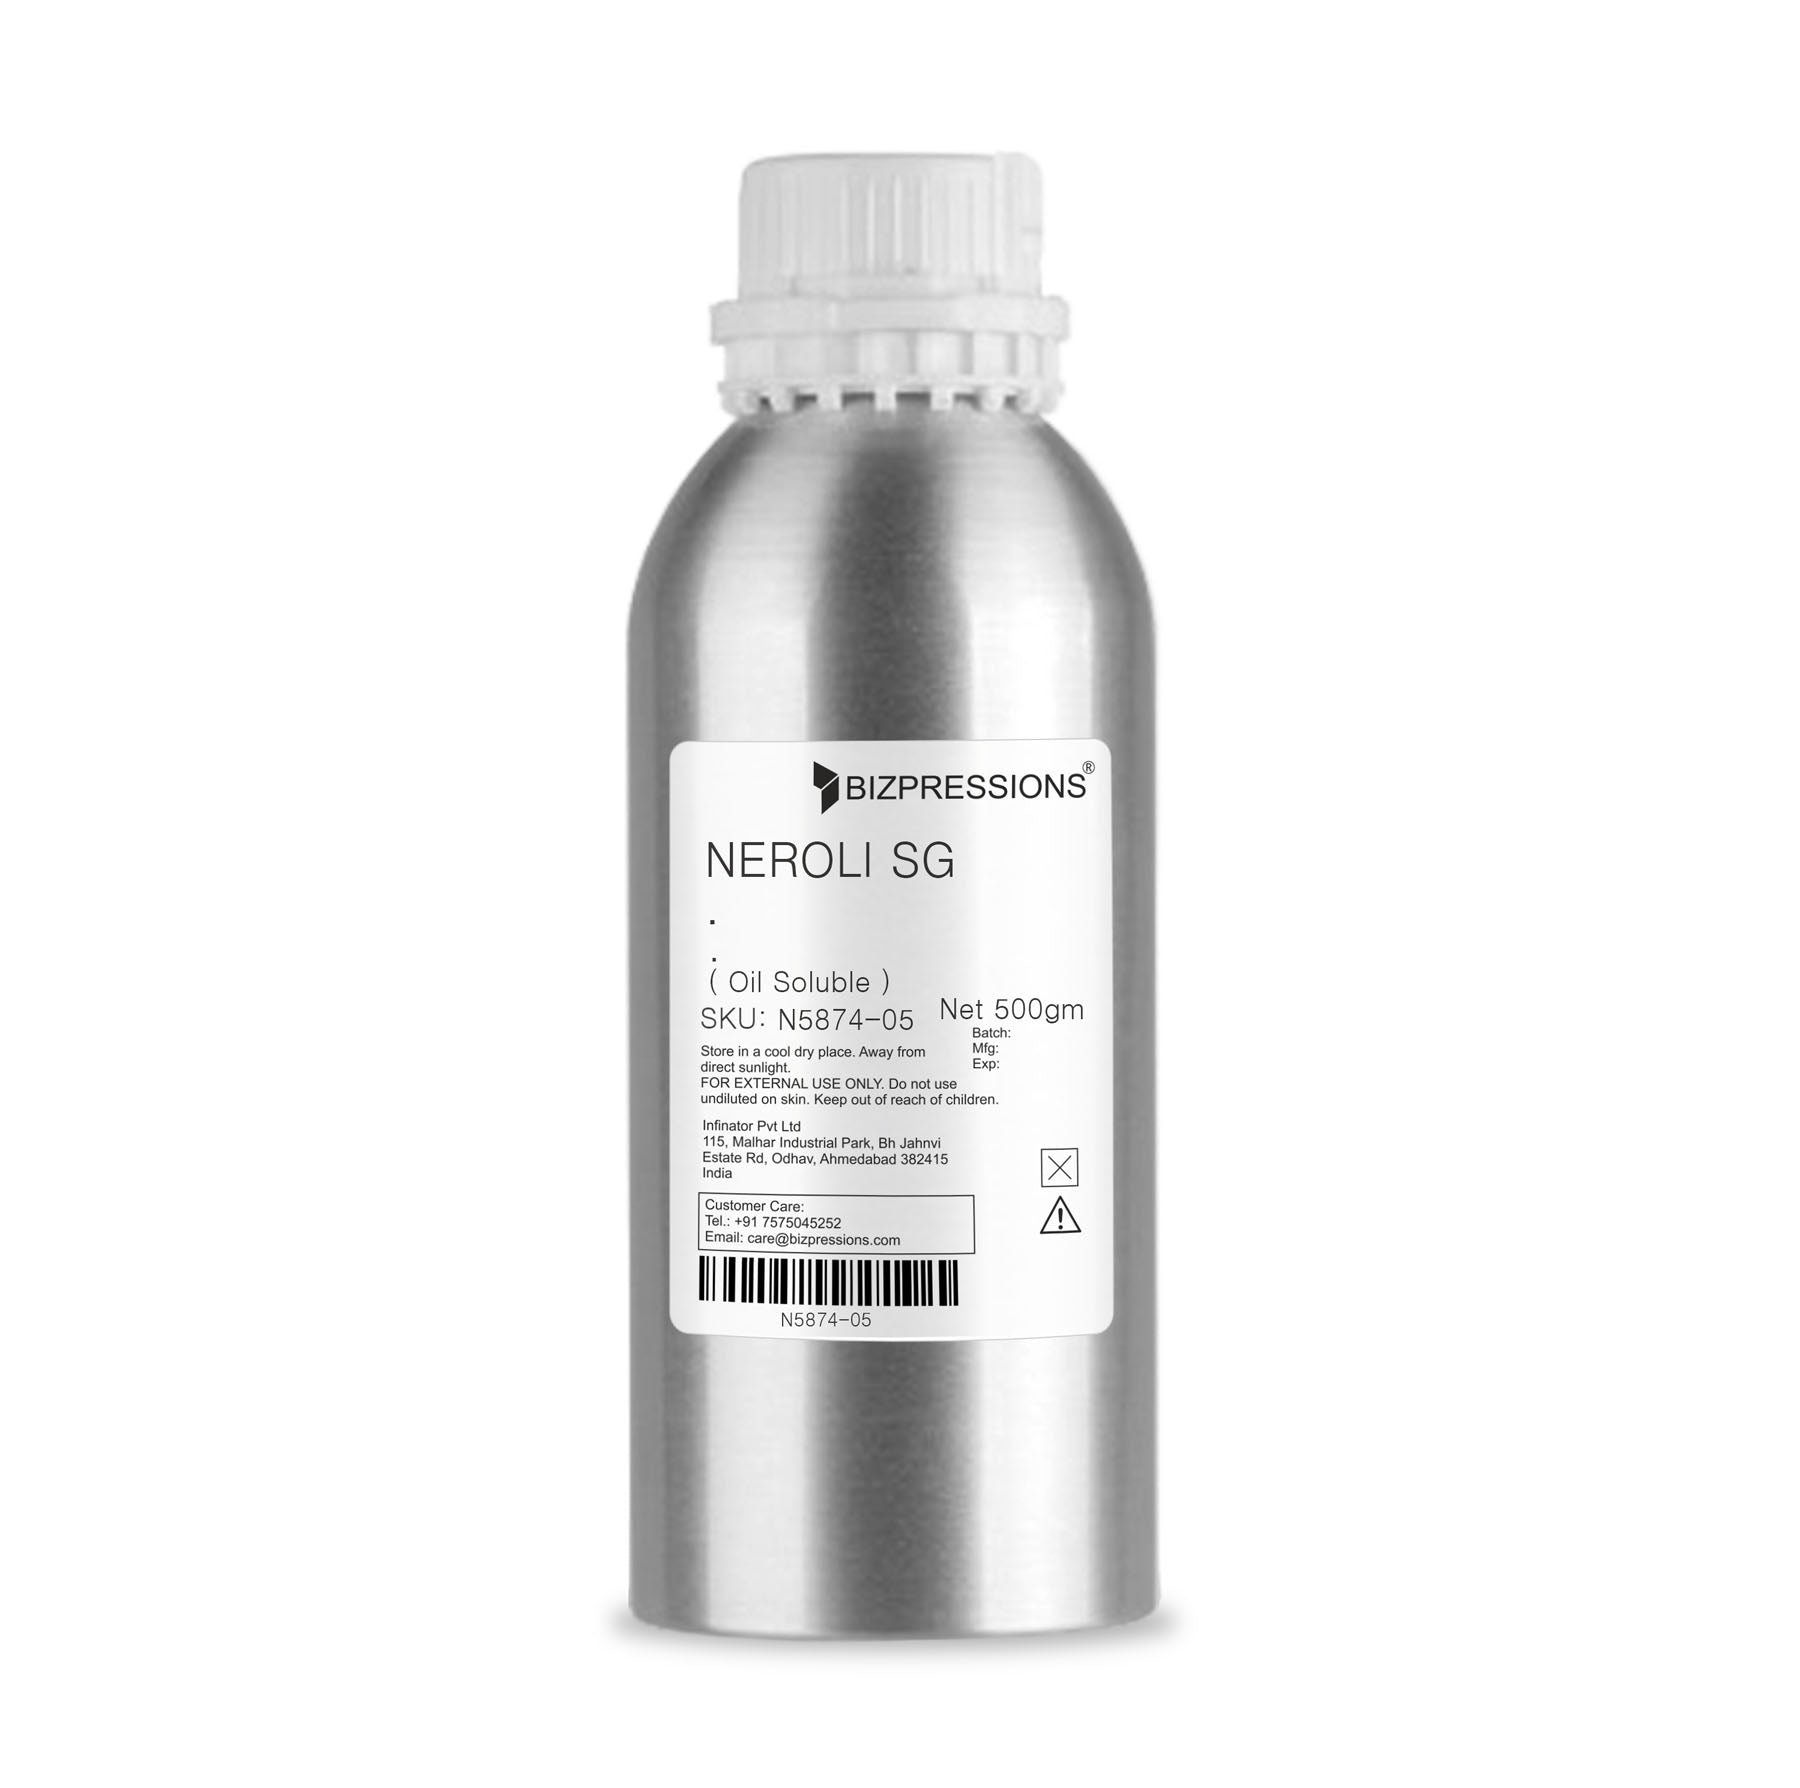 NEROLI SG - Fragrance ( Oil Soluble ) - 500 gm